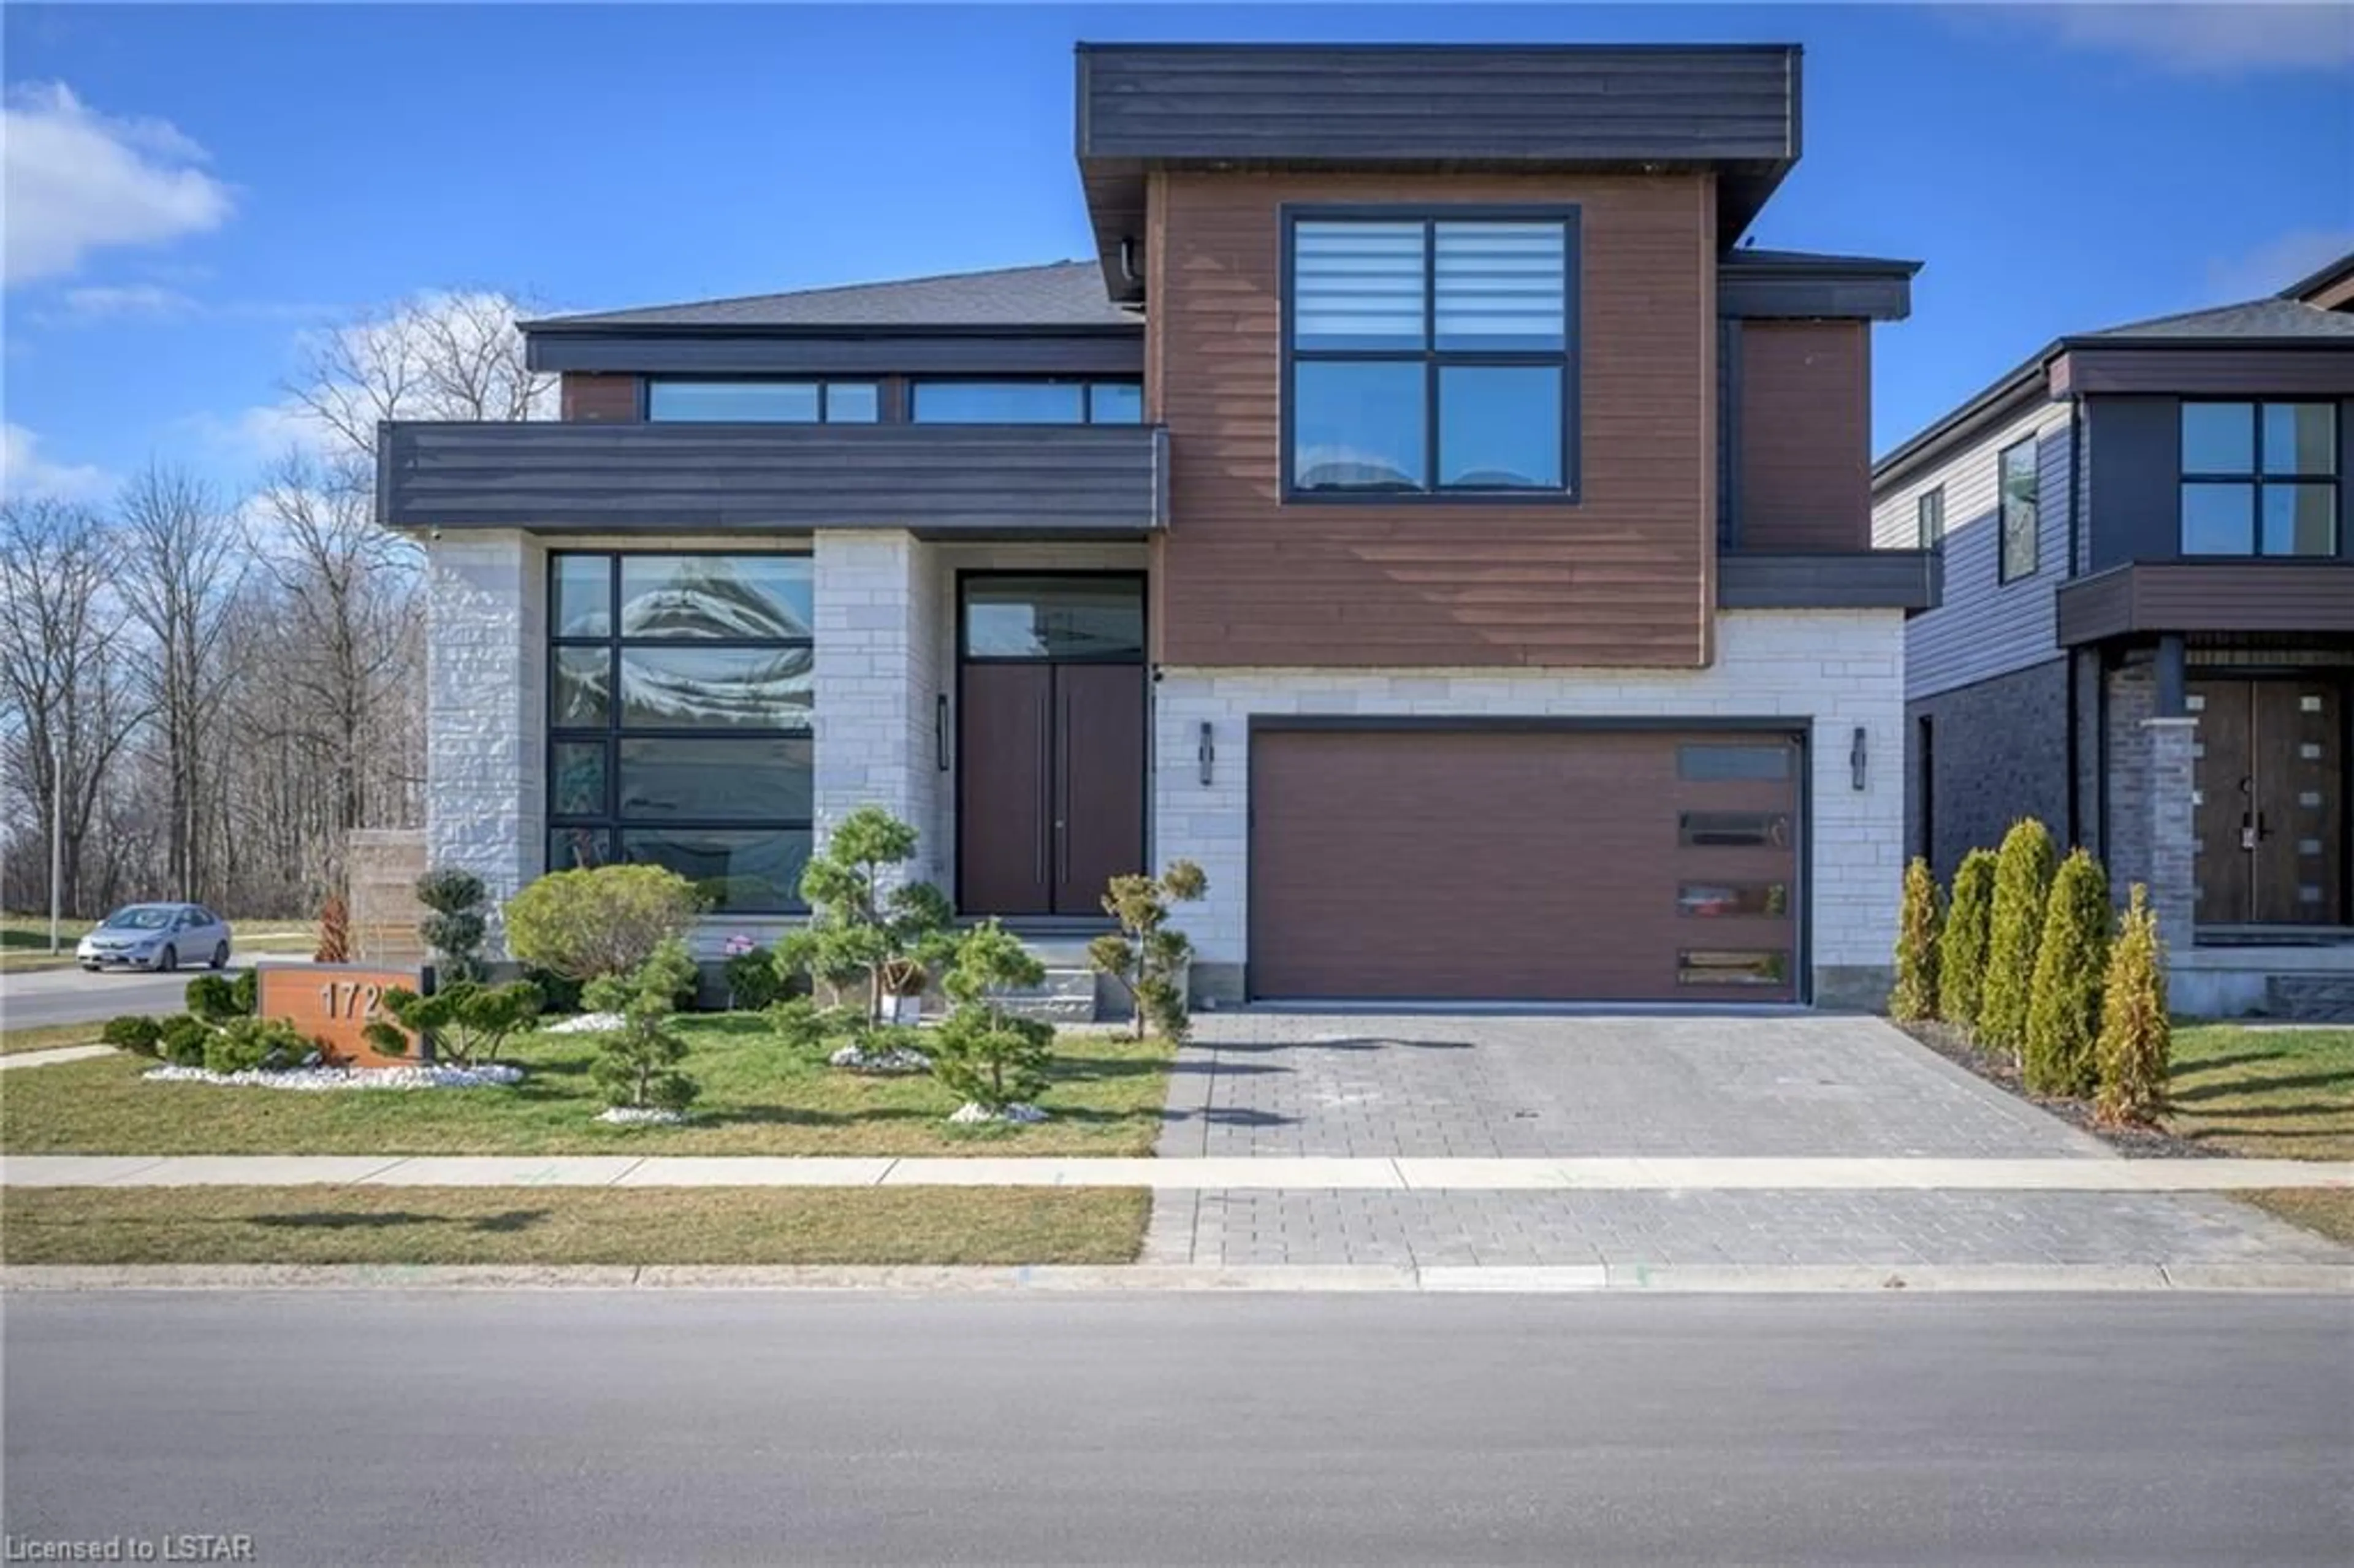 Frontside or backside of a home for 1723 Brayford Ave, London Ontario N6K 4R6